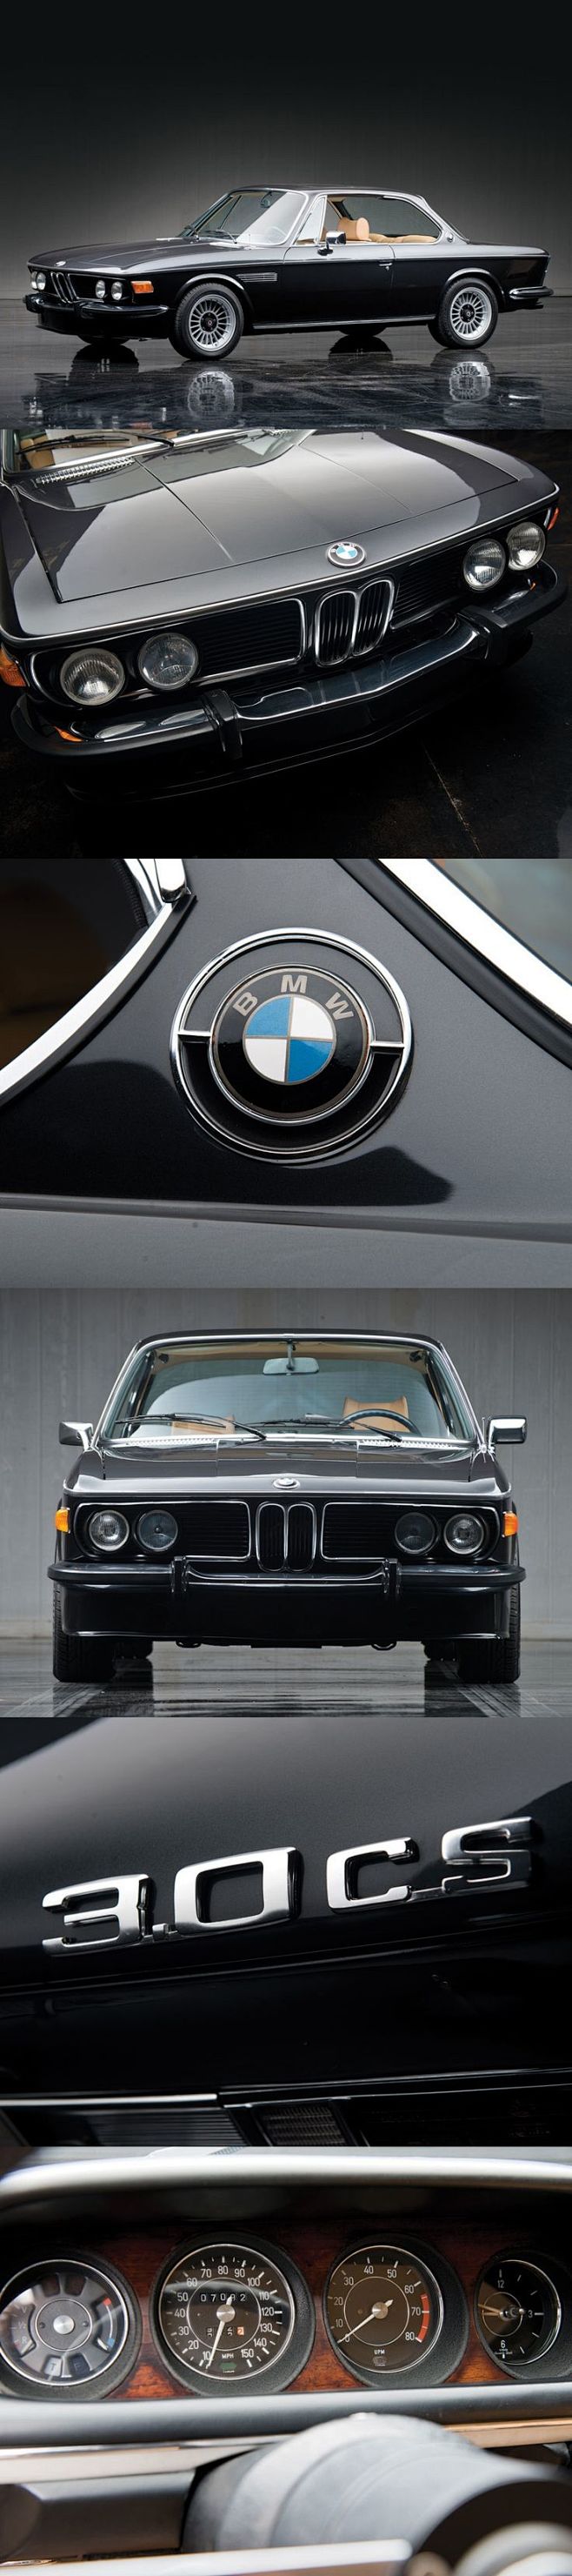 1974 BMW 3.0 CS: